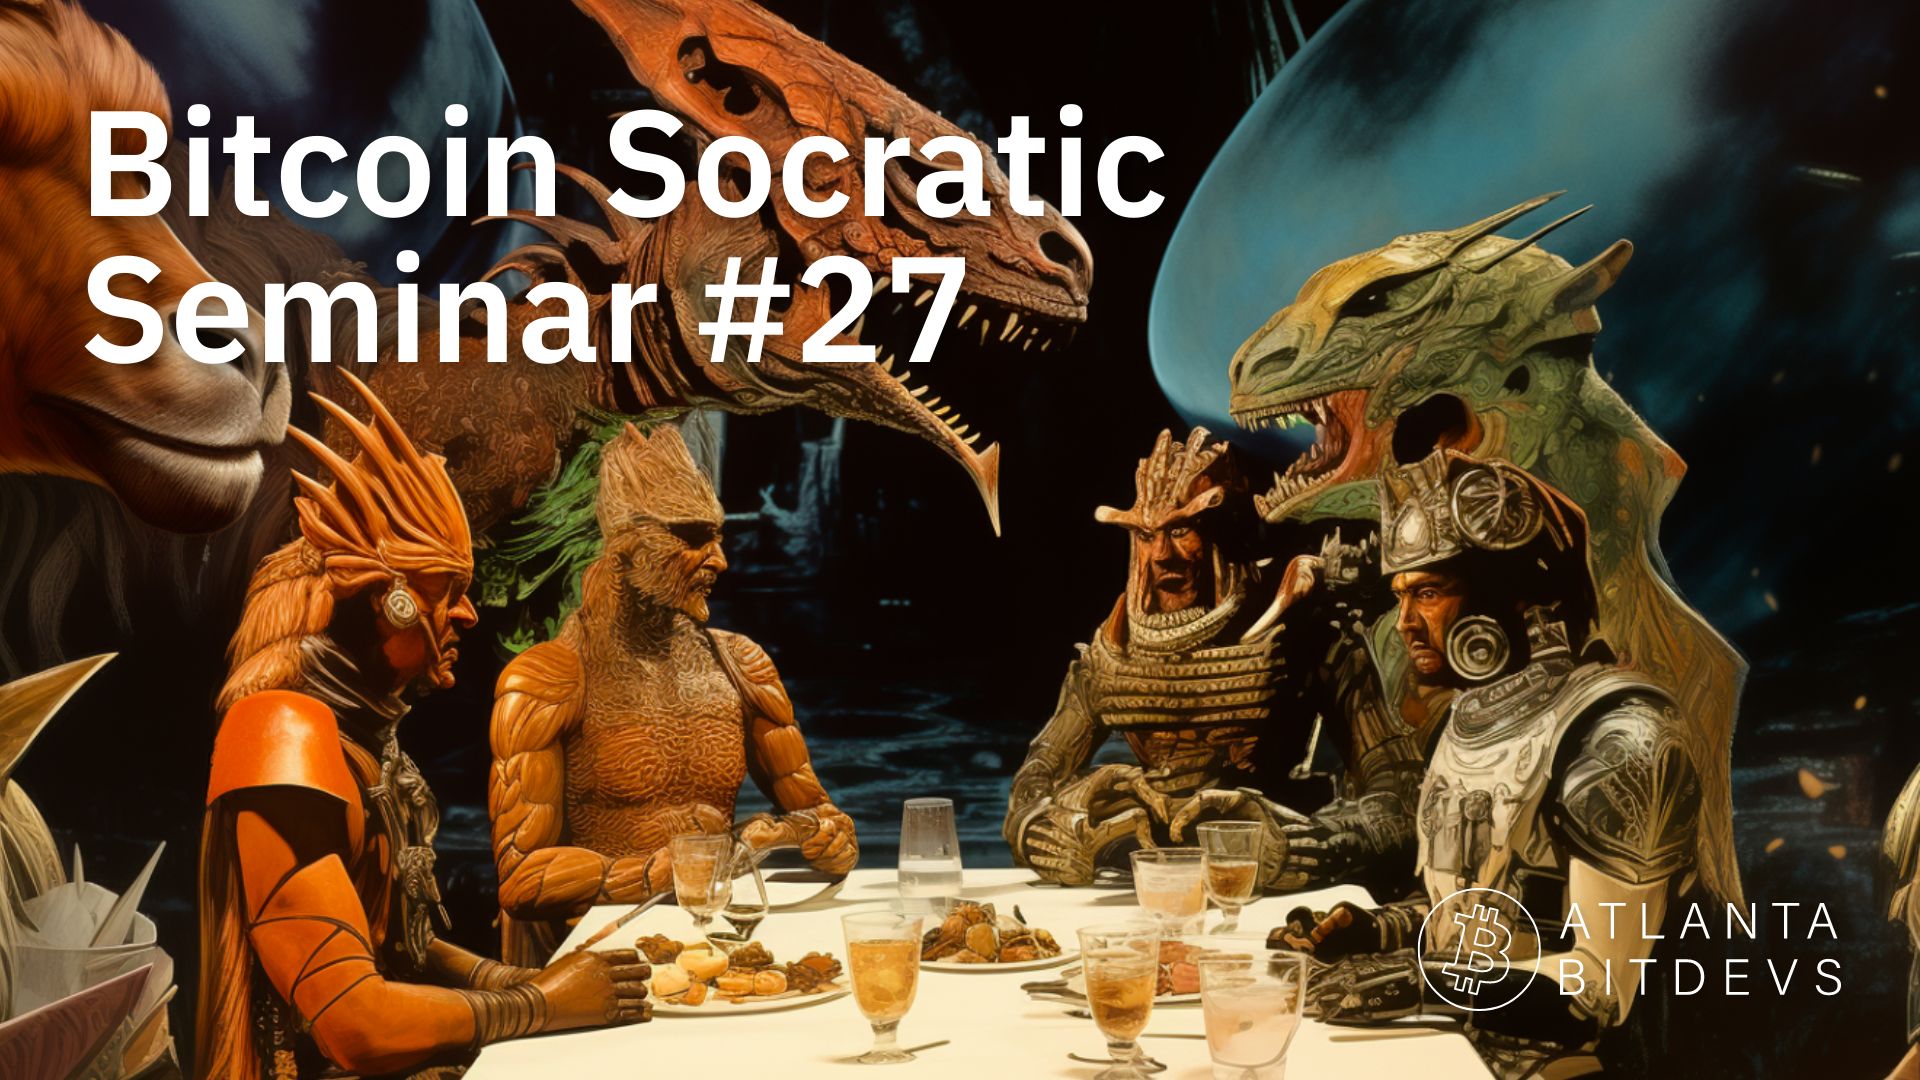 Bitcoin Socratic Seminar #27